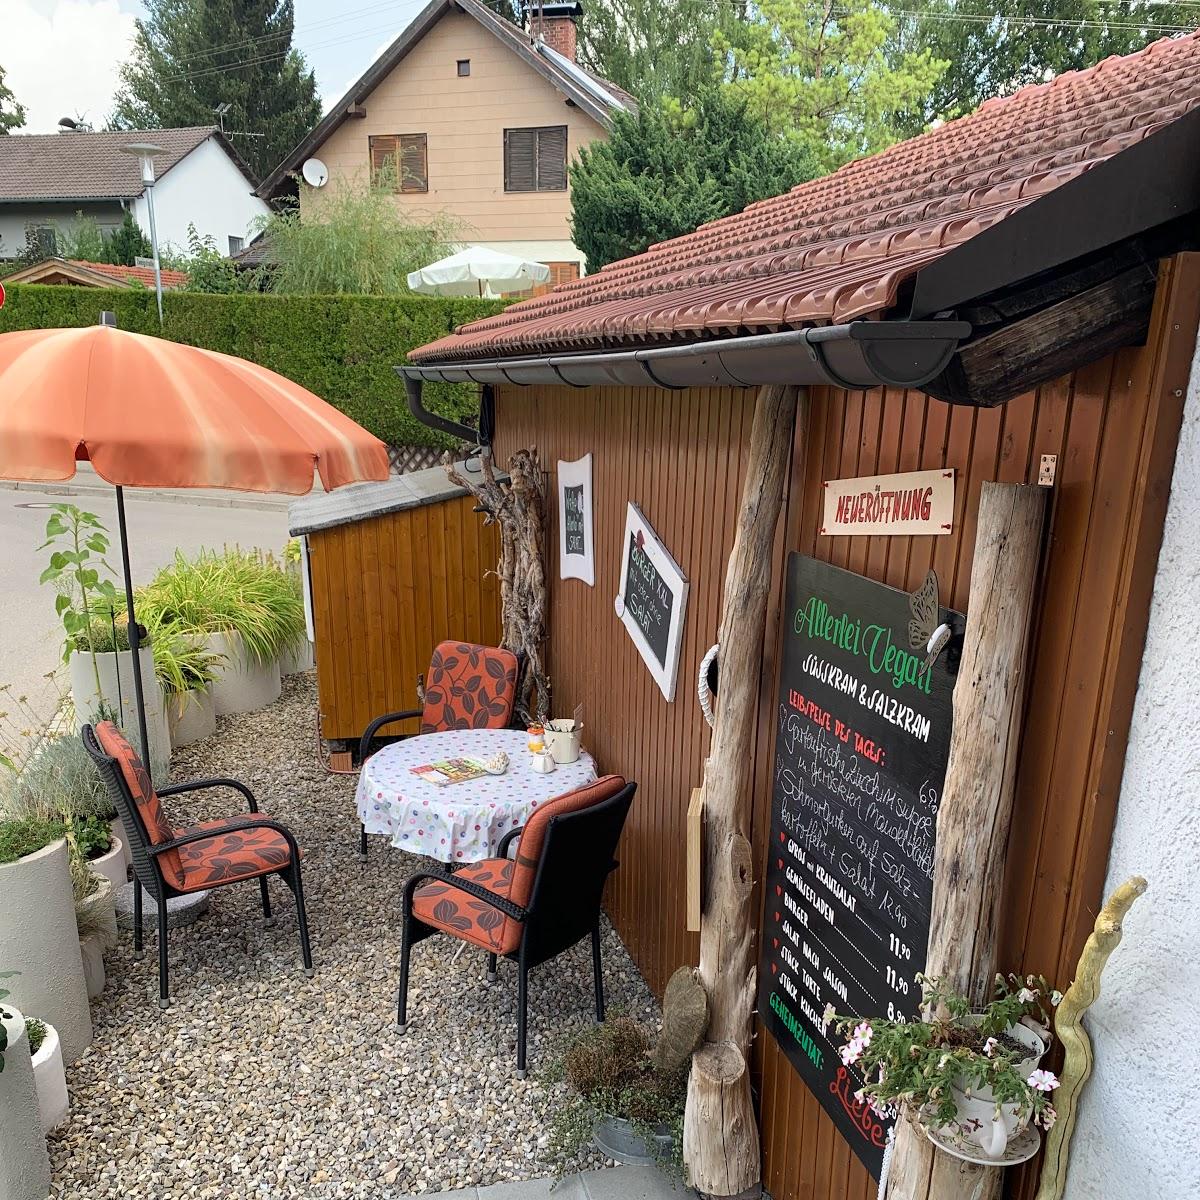 Restaurant "Allerlei Vegan" in Schongau